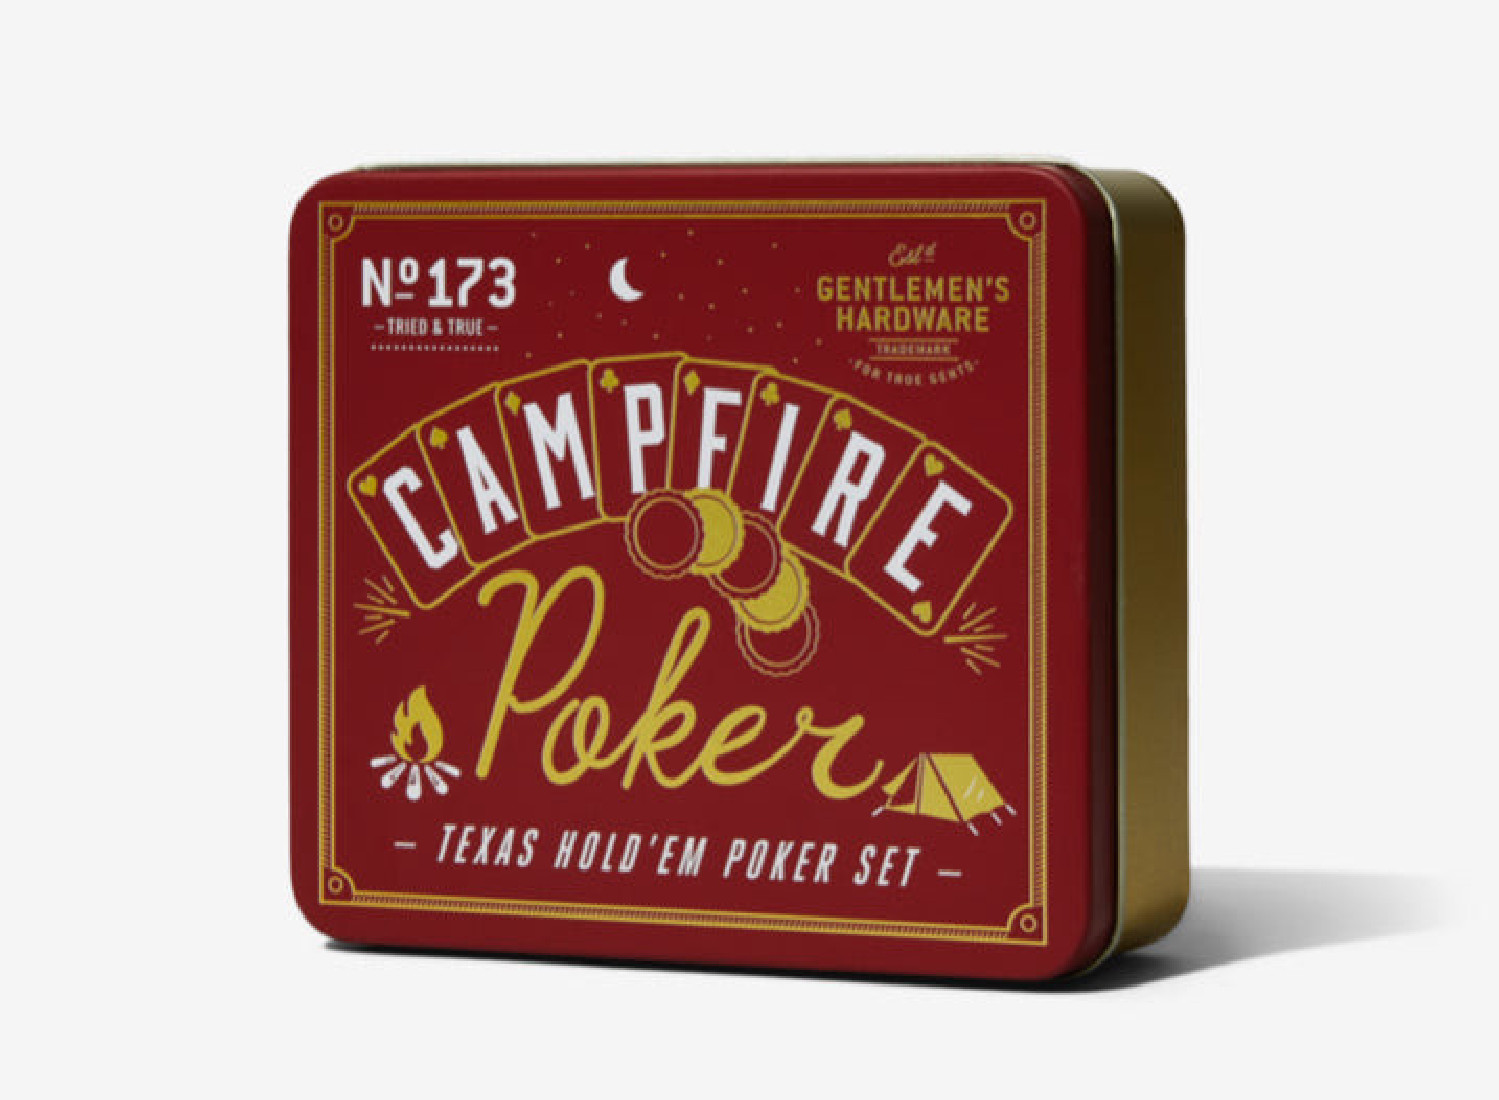 Gentlemens Hardware, Campfire Poker, Texas hold ;em poker set, 173